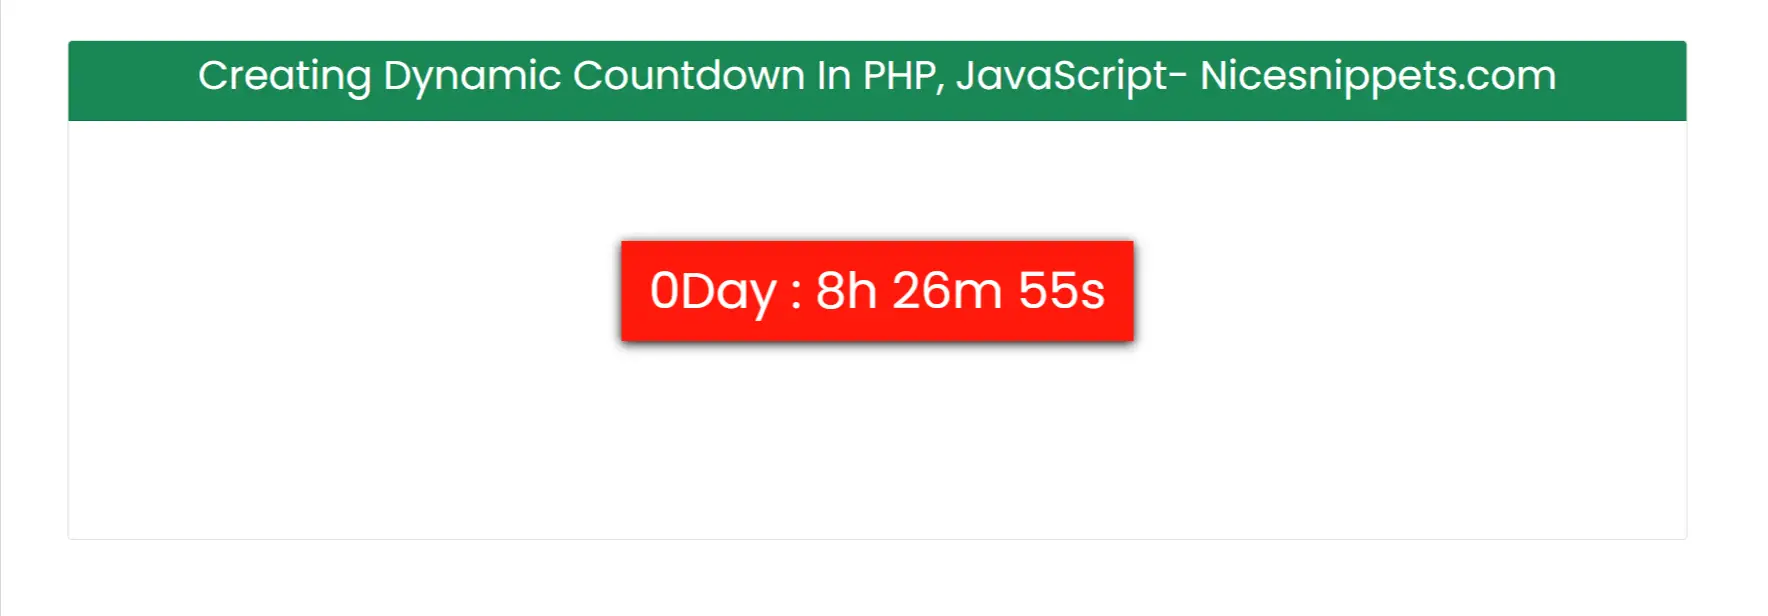 Creating Dynamic Countdown in PHP, JavaScript